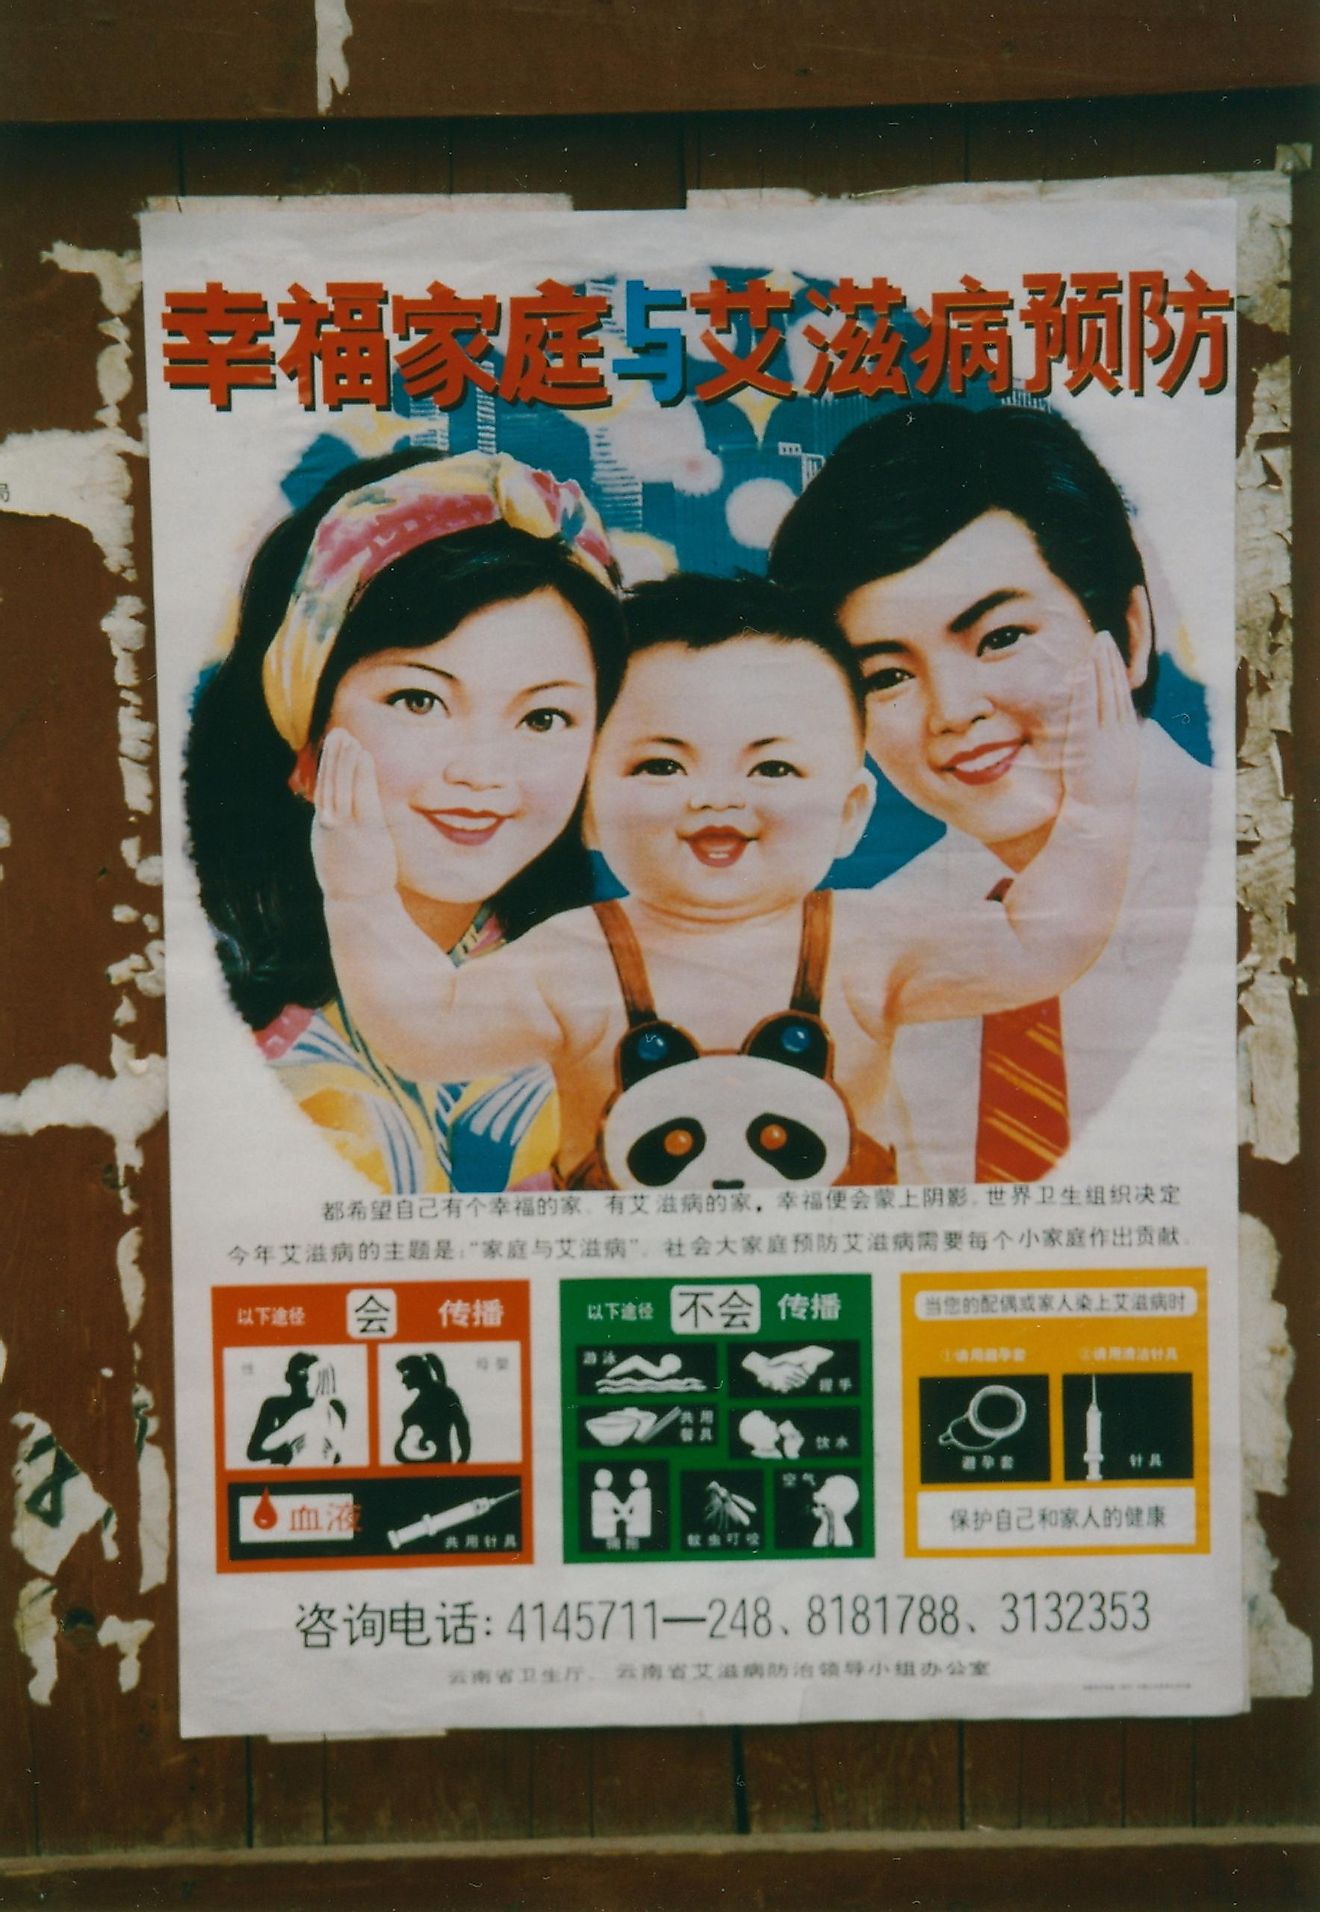 Zhongdian, one child poster. Image credit: Arian Zwegers/Flickr.com